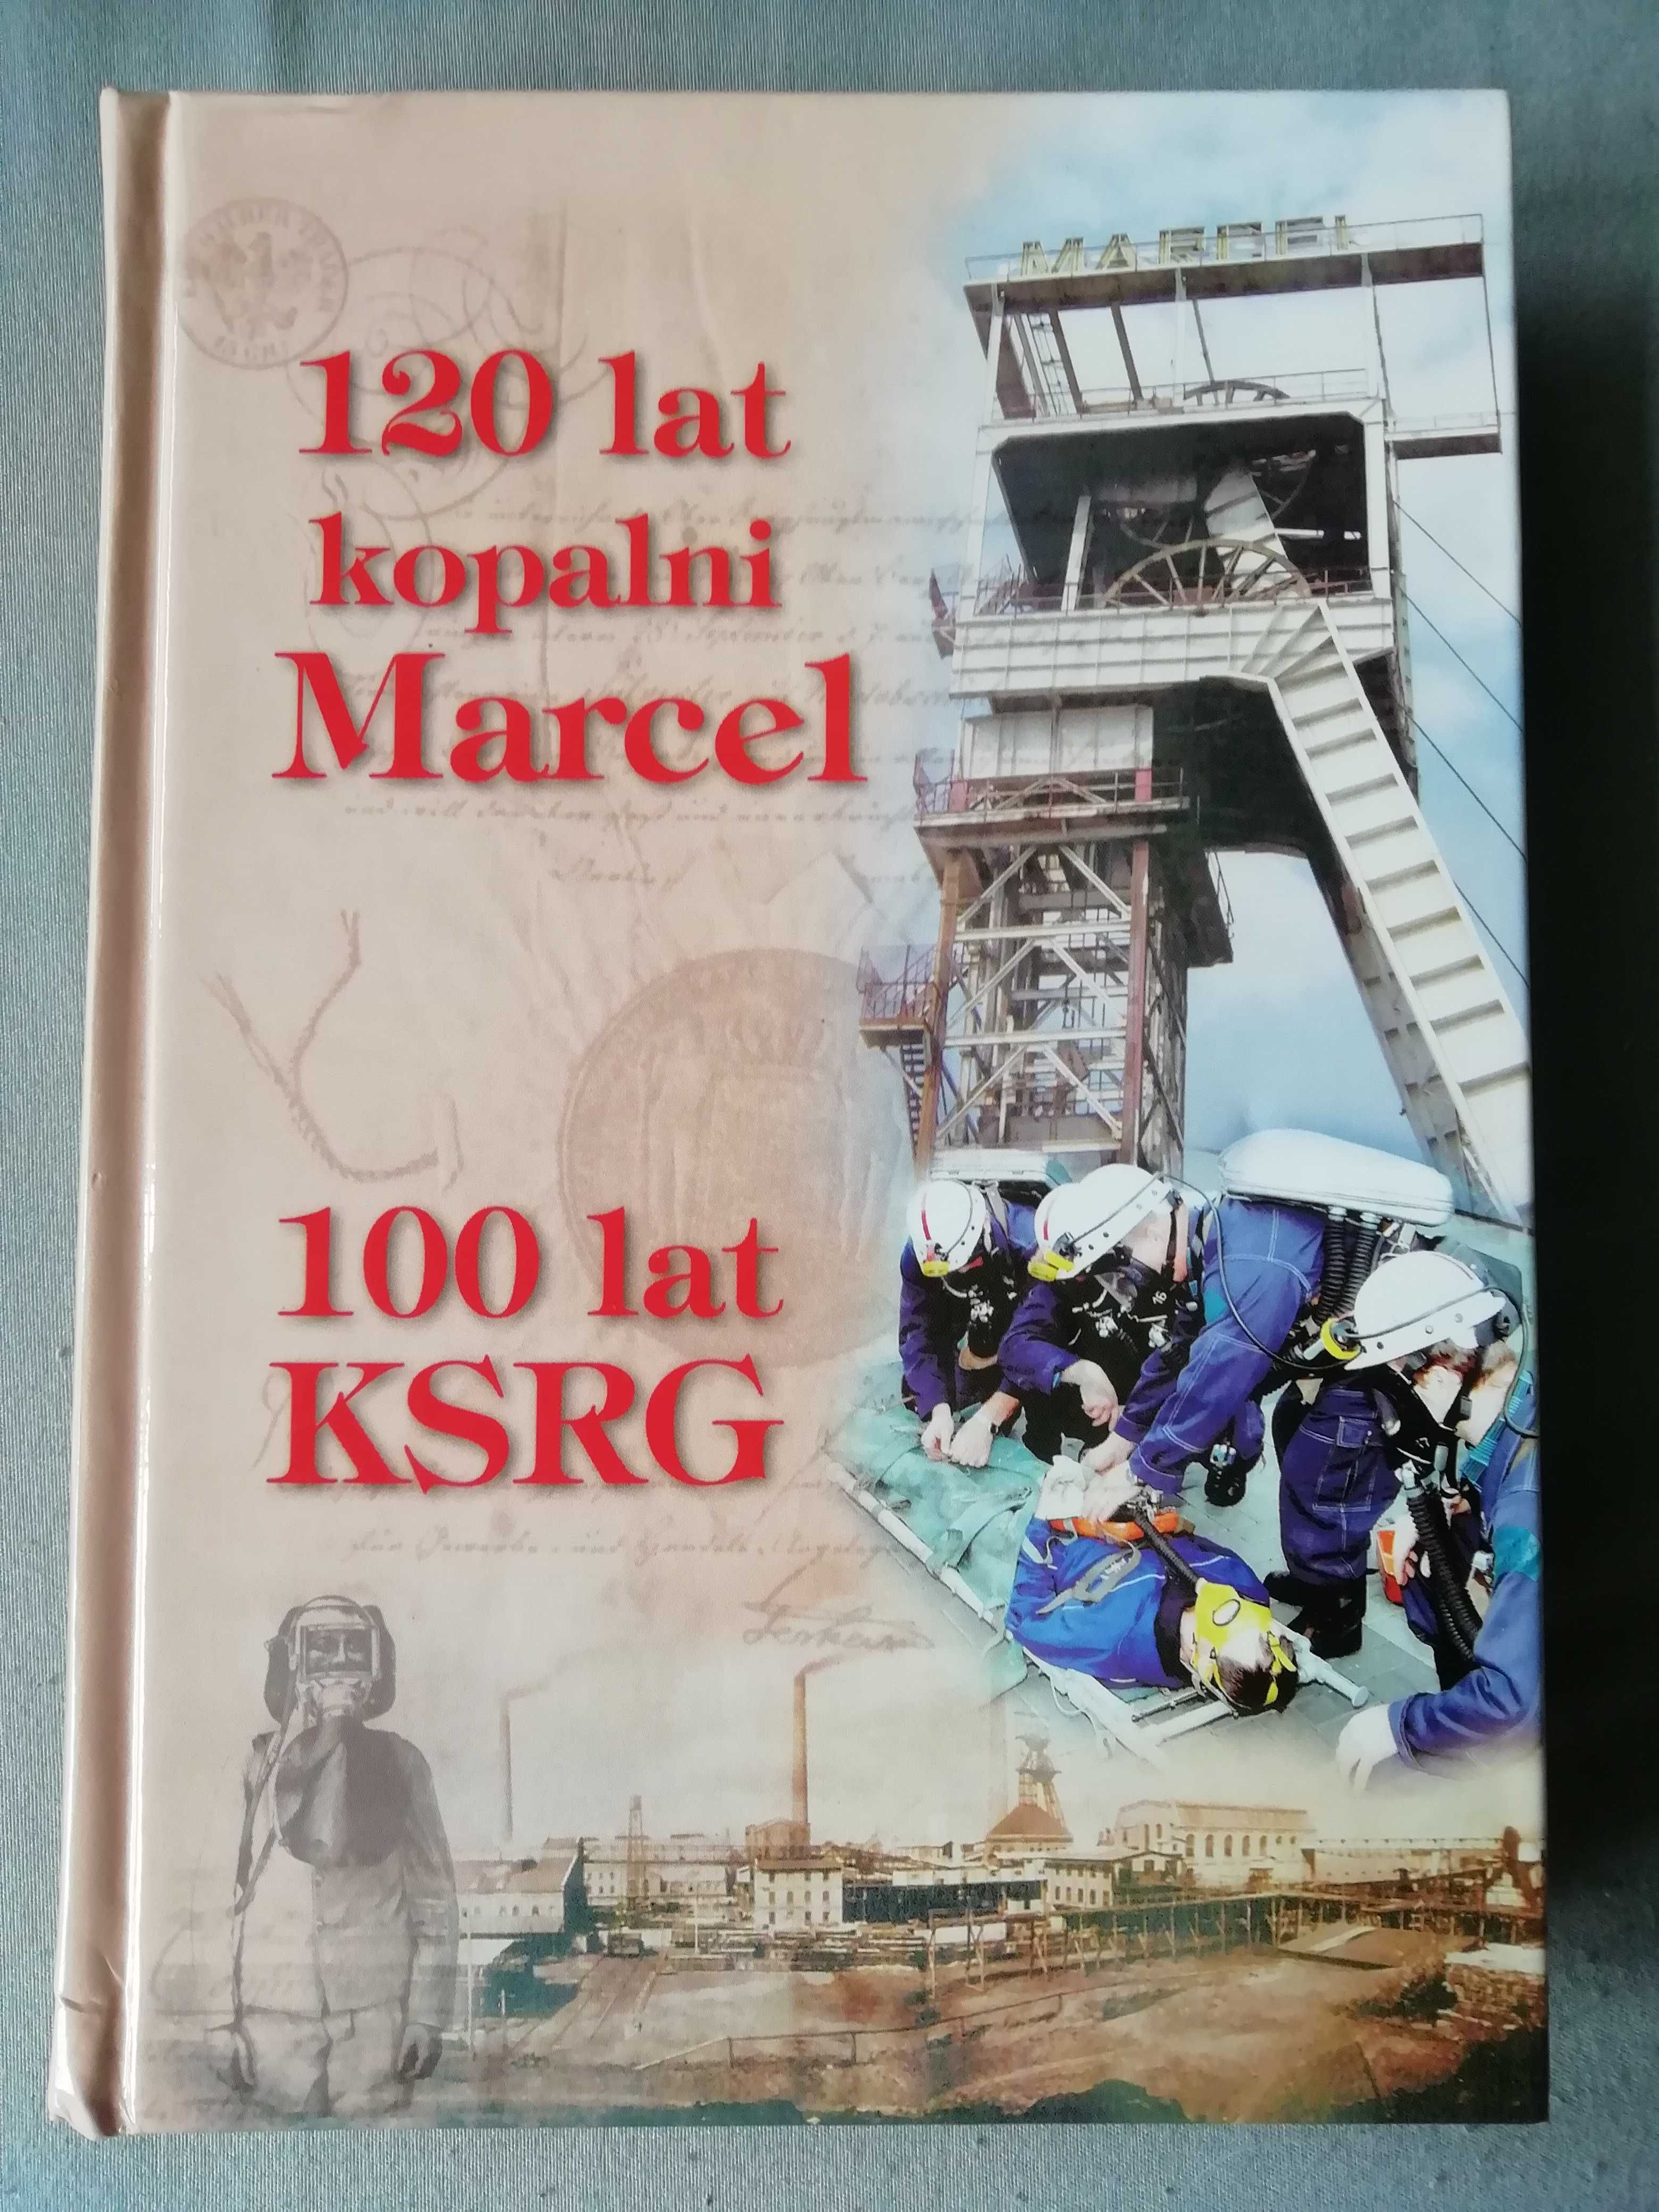 120 lat kopalni Marcel 100 lat KSRG - Henryk Rojek